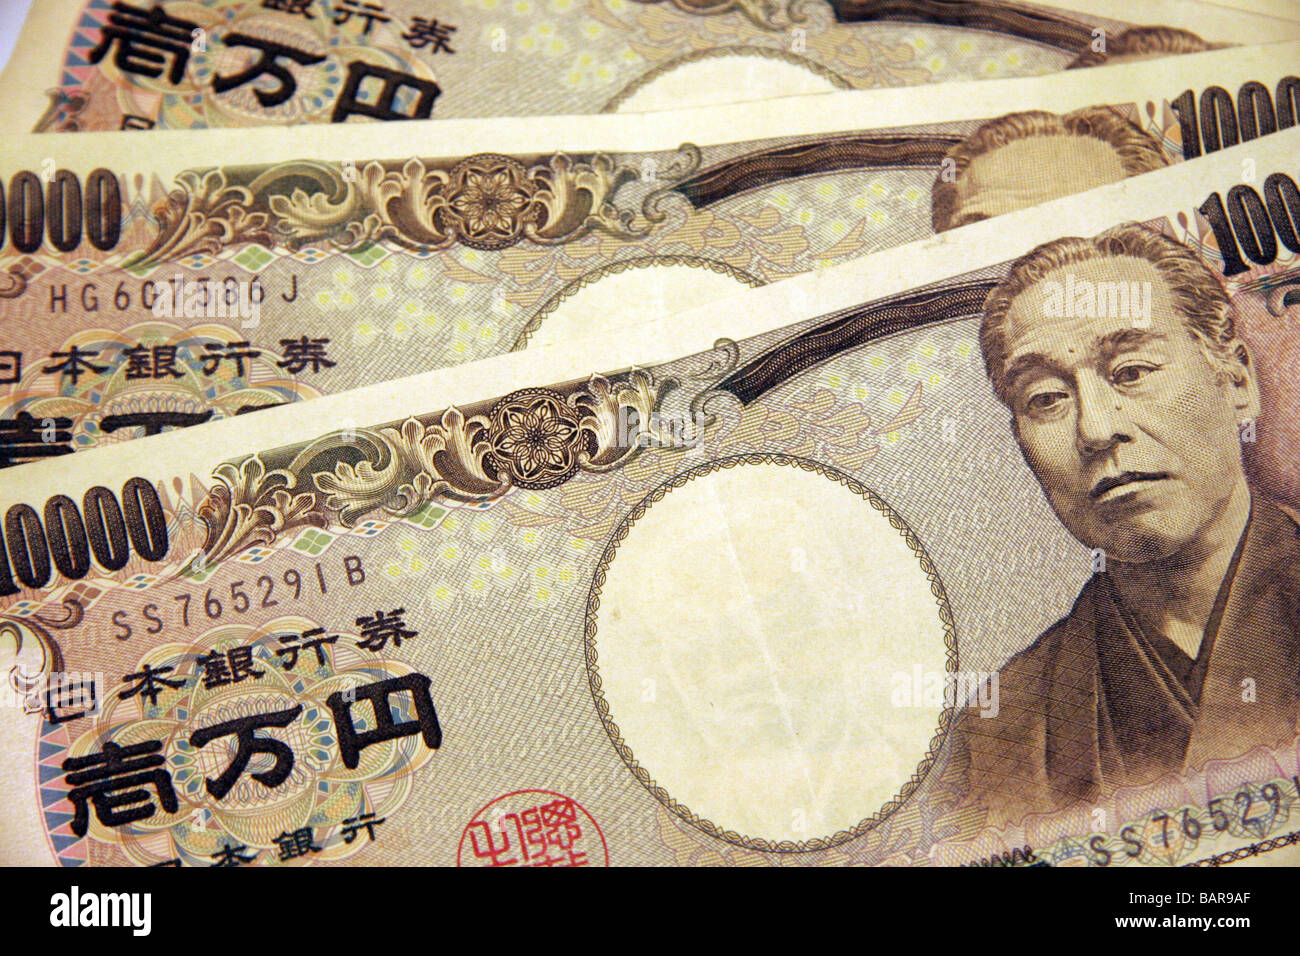 Japanese Yen notes Stock Photo